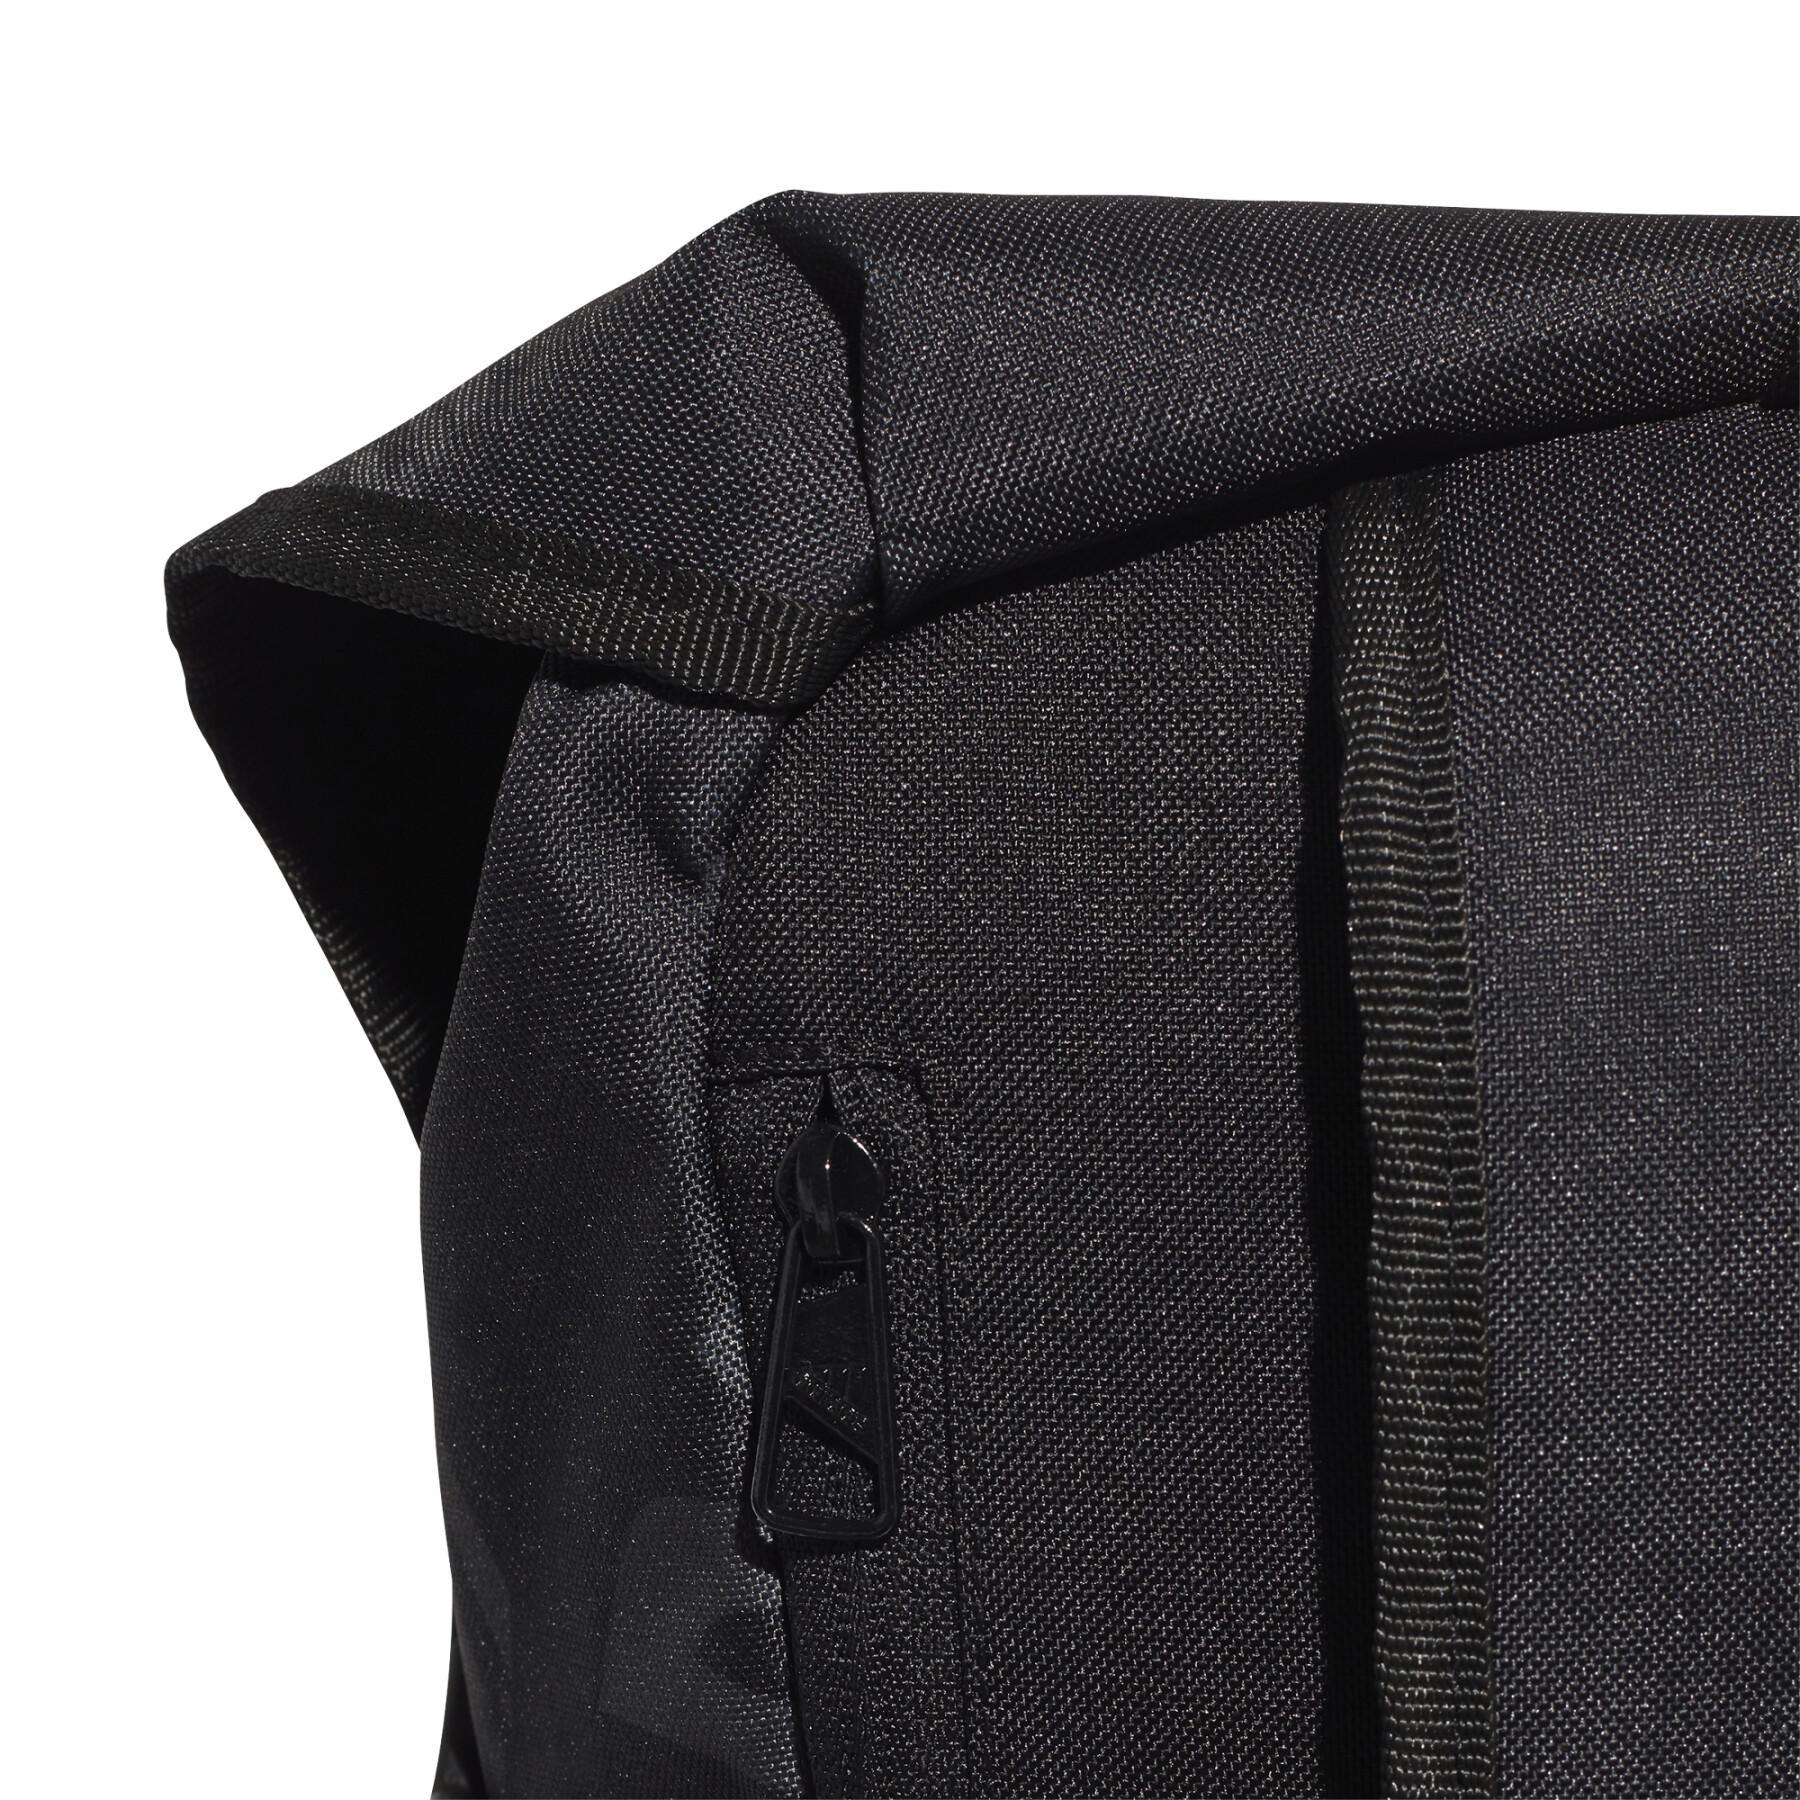 Backpack adidas 4ATHLTS 3-Stripes